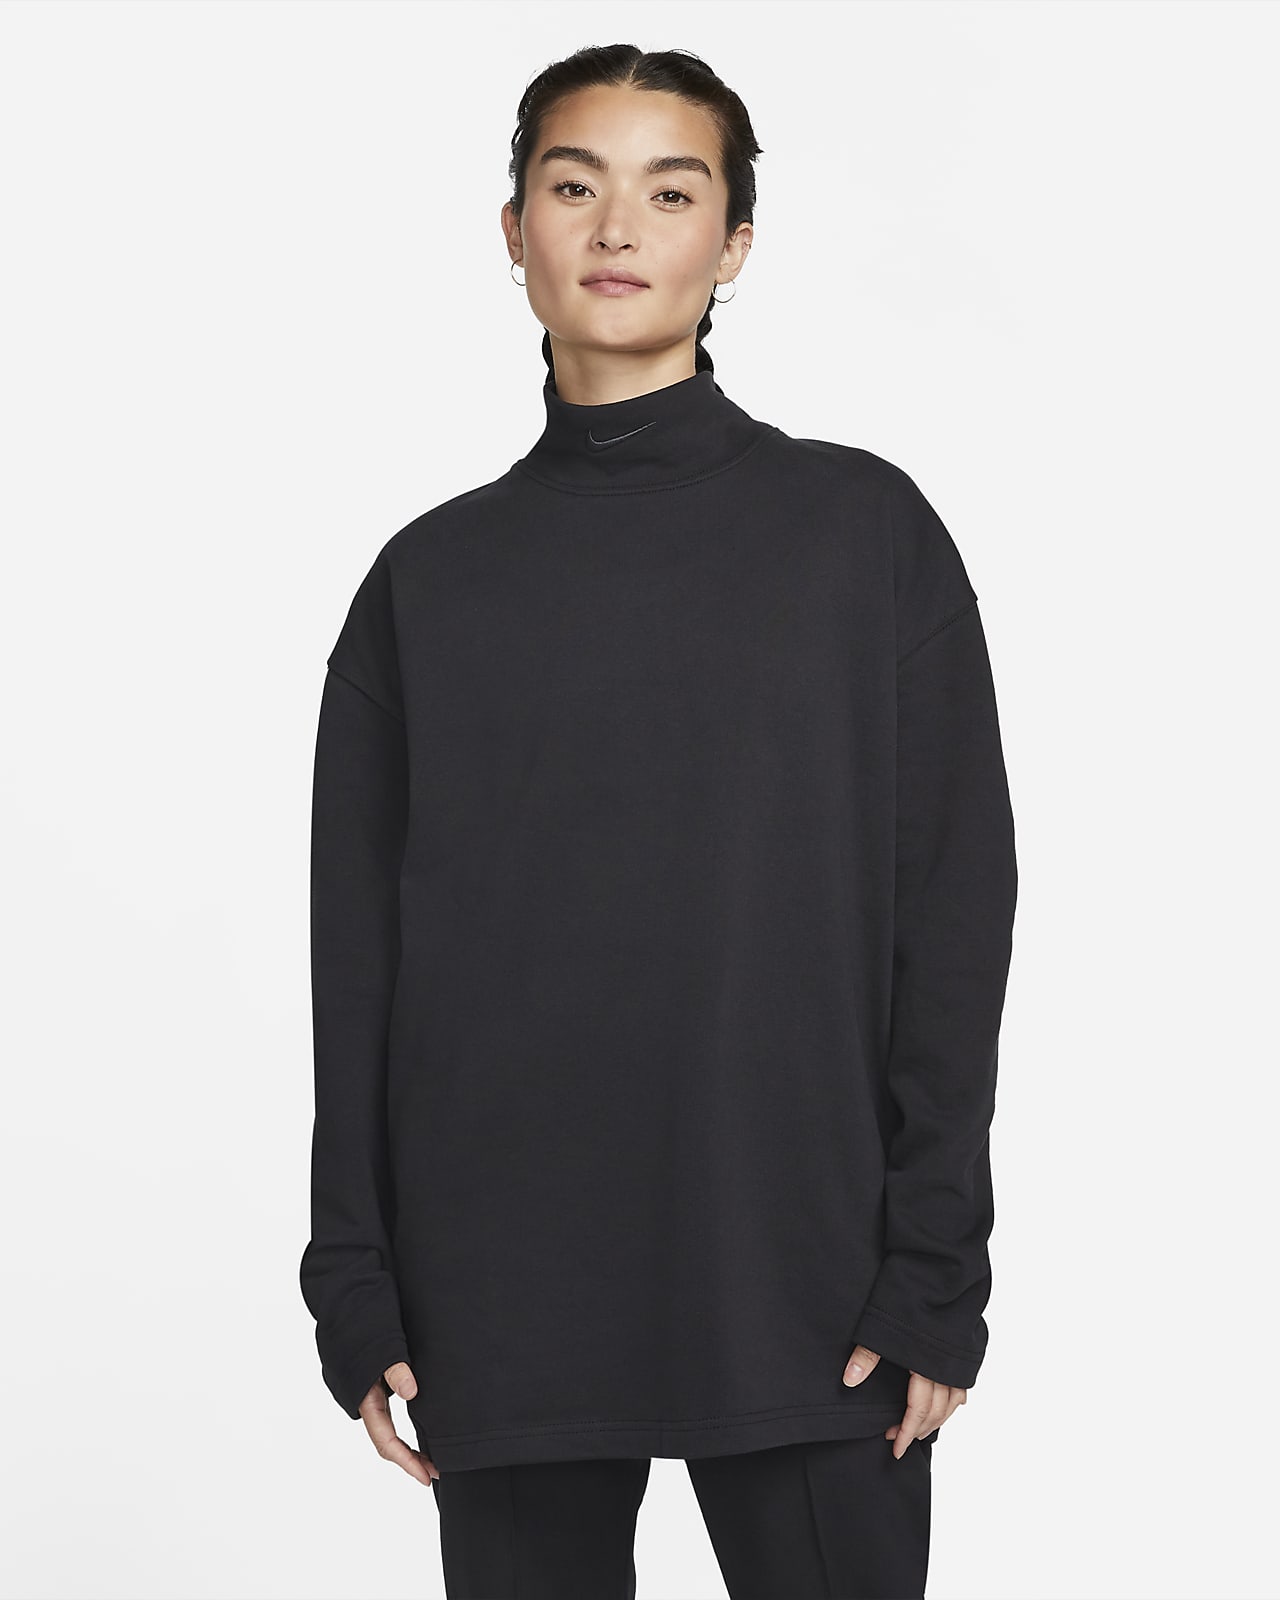 Nike Sportswear-sweatshirt i fleece med tragthals